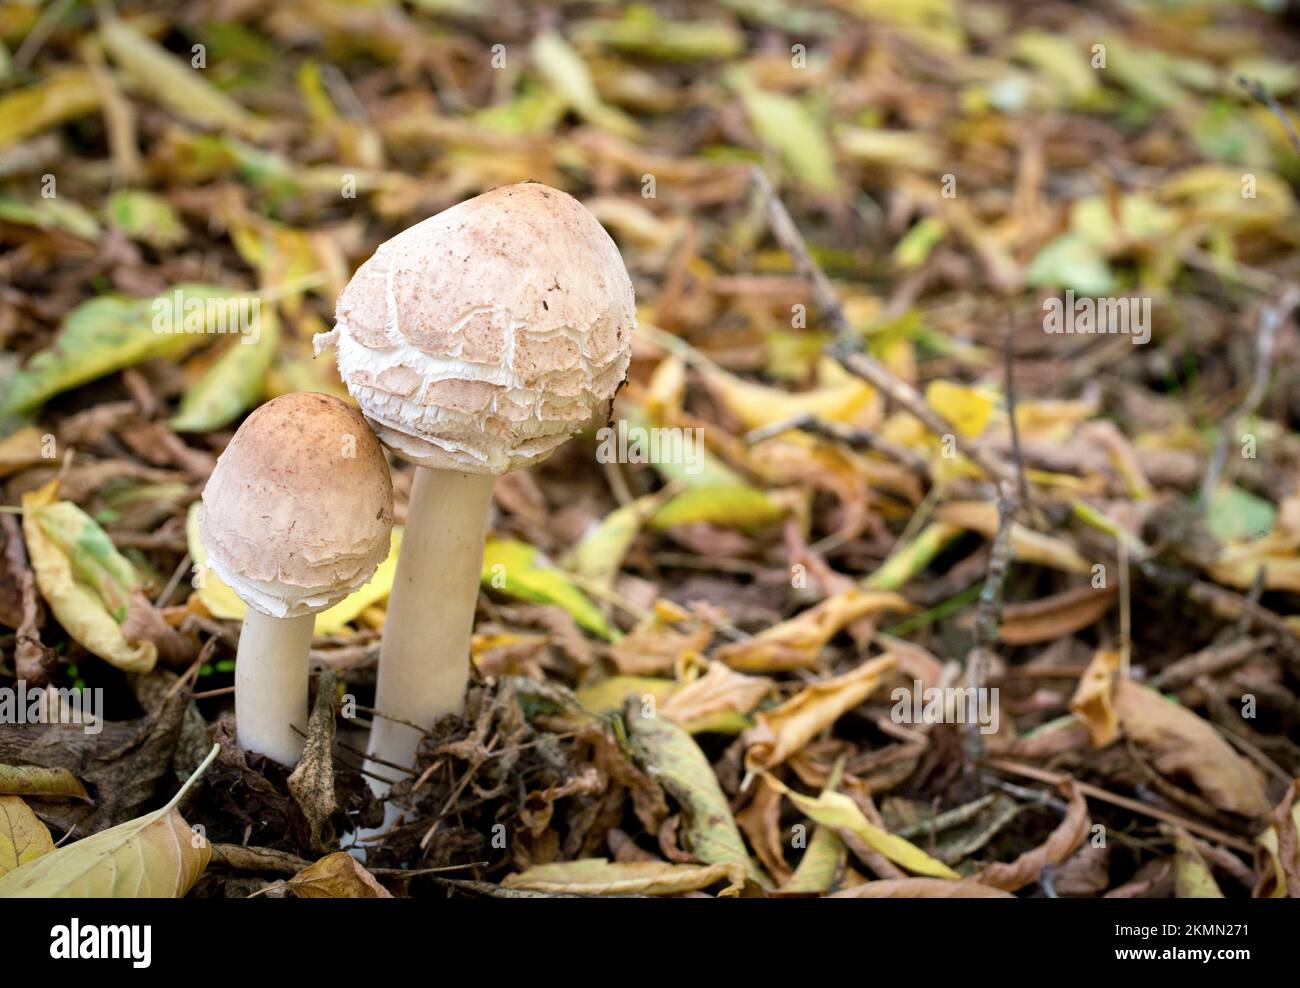 Shaggy parasol mushrooms, Chlorophyllum rhacodes, found growing under an ironwood tree, in Troy, Montana.   Scientific synonyms of this mushroom inclu Stock Photo